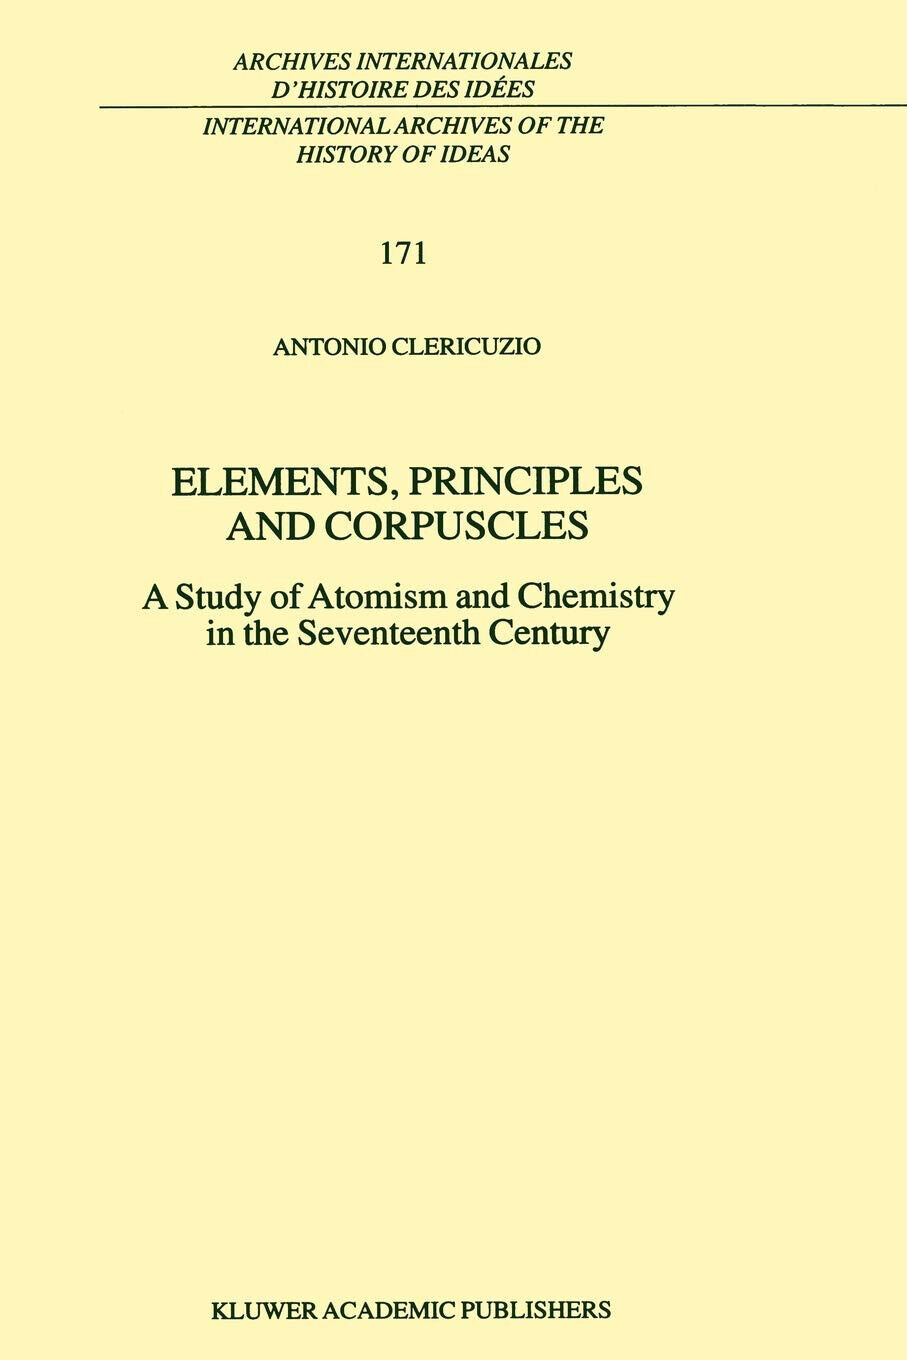 Elements, Principles and Corpuscles - Antonio Clericuzio - Springer, 2010